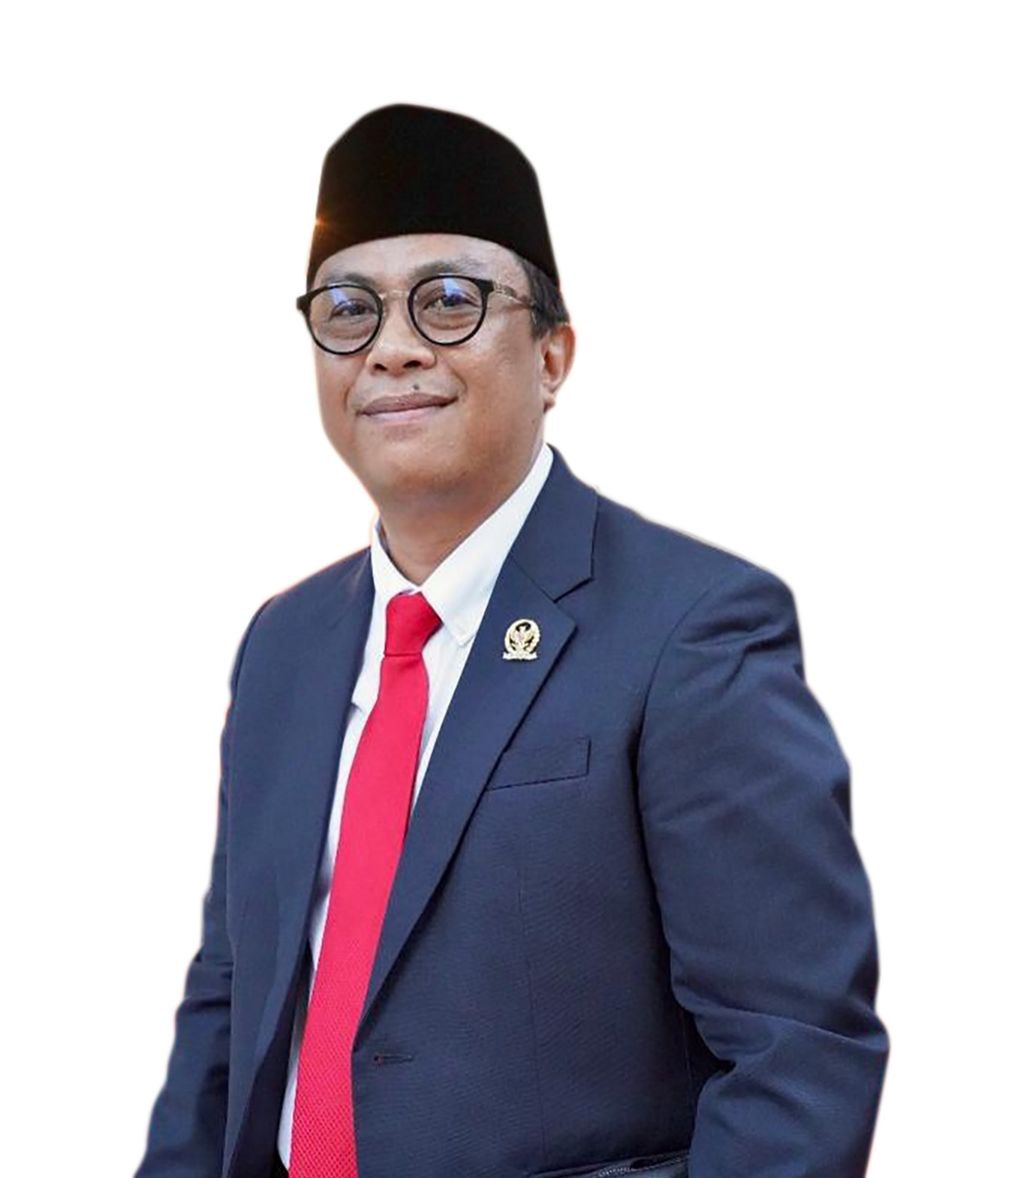  Anggota DPR dari Partai Nasdem, Muhammad Rapsel Ali, yang juga merupakan menantu dari Wakil Presiden Ma’ruf Amin meninggal di Makassar, Sulawesi Selatan, pada Minggu (9/4/2023) sekitar pukul 09.10 Wita.